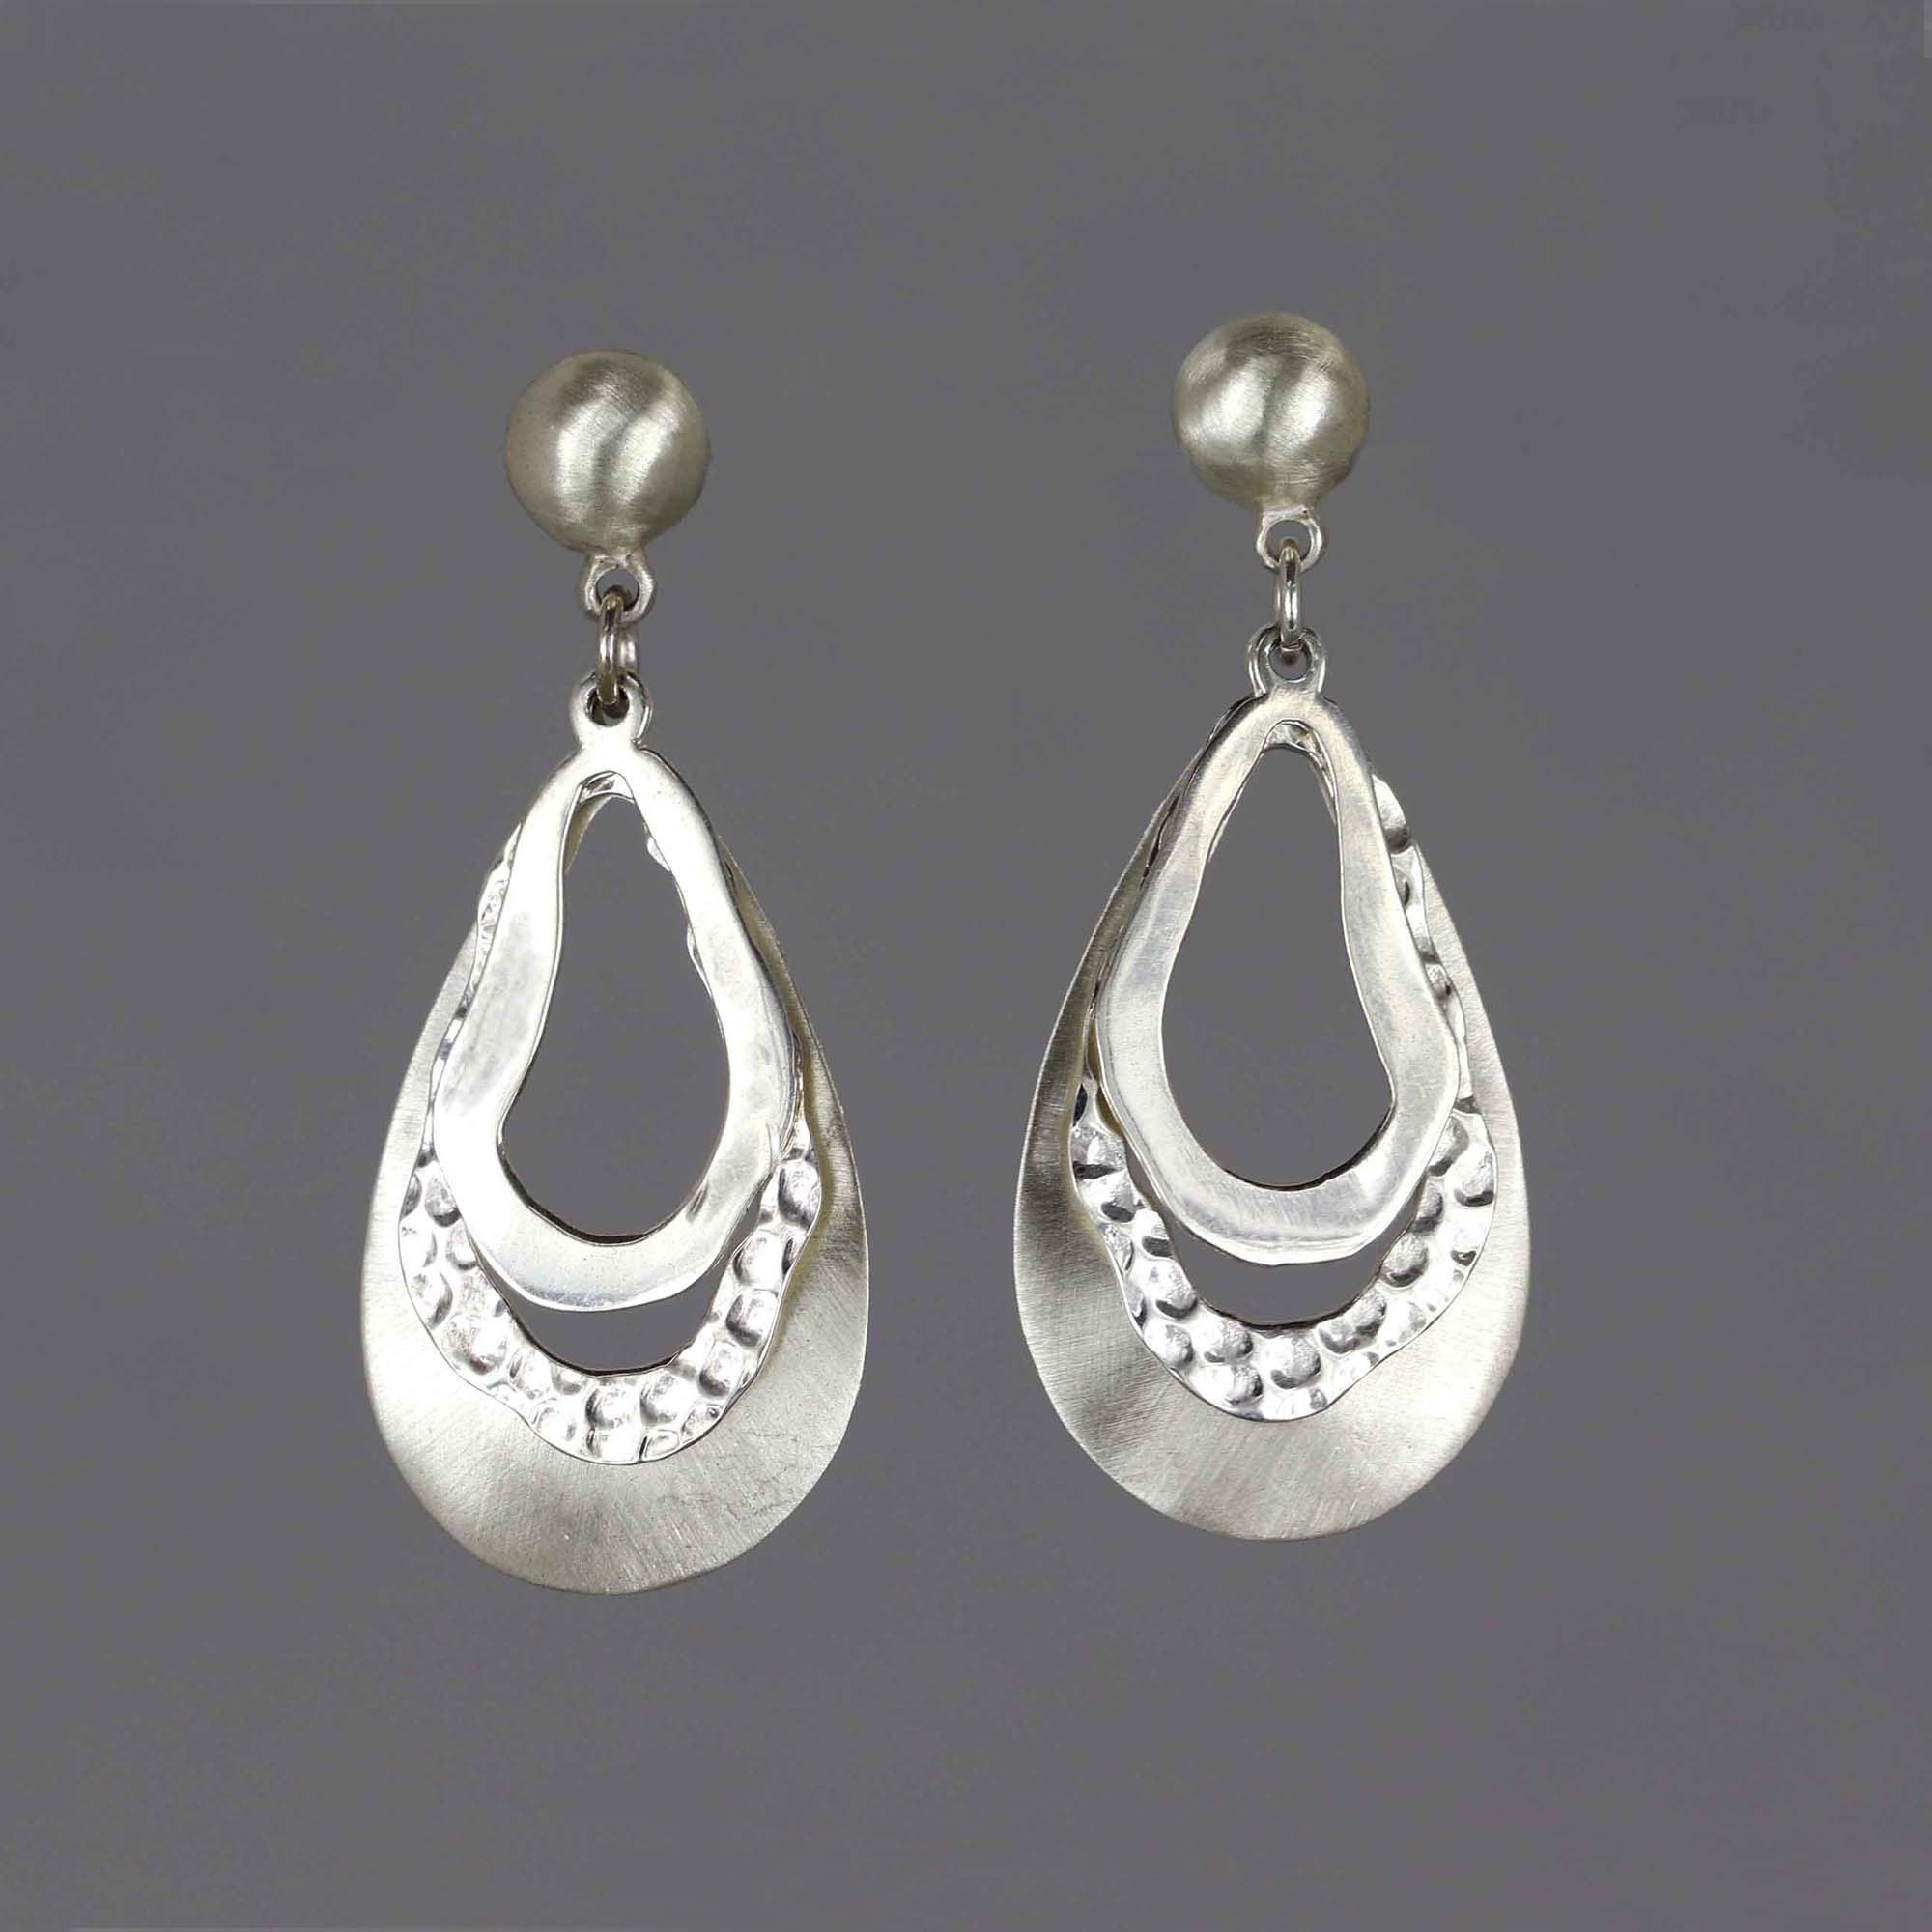 Anni Maliki, Signature Handmade Silver Jewelry